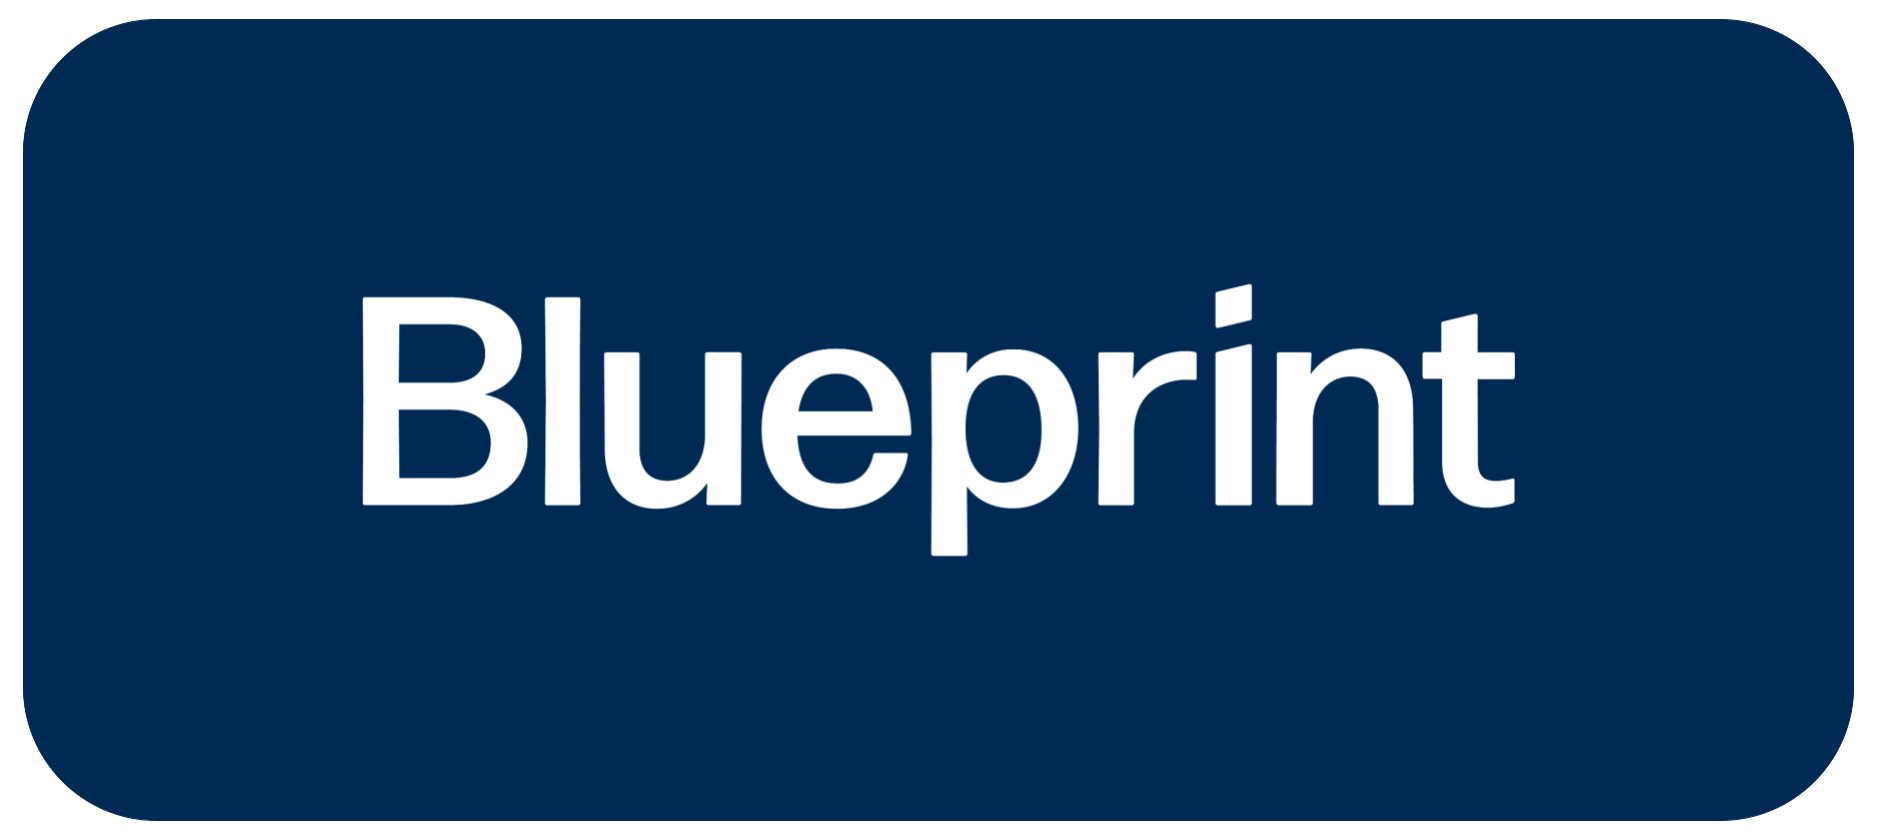 Logo Blueprint v3